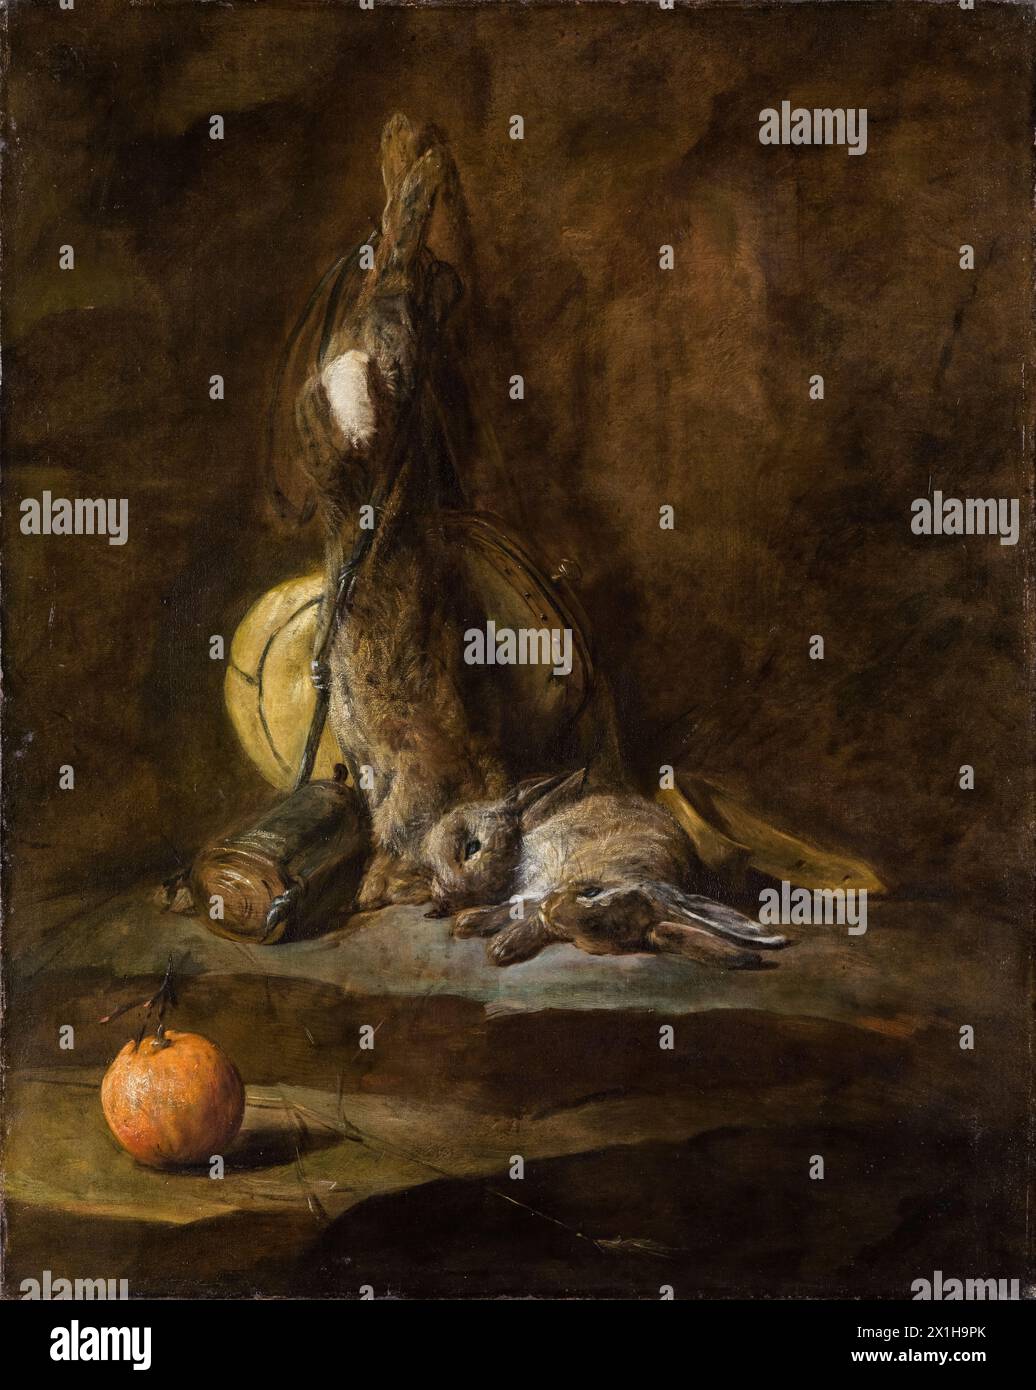 Jean Baptiste Siméon Chardin, Still Life with dead Rabbit, painting in oil on canvas, 1728 Stock Photo